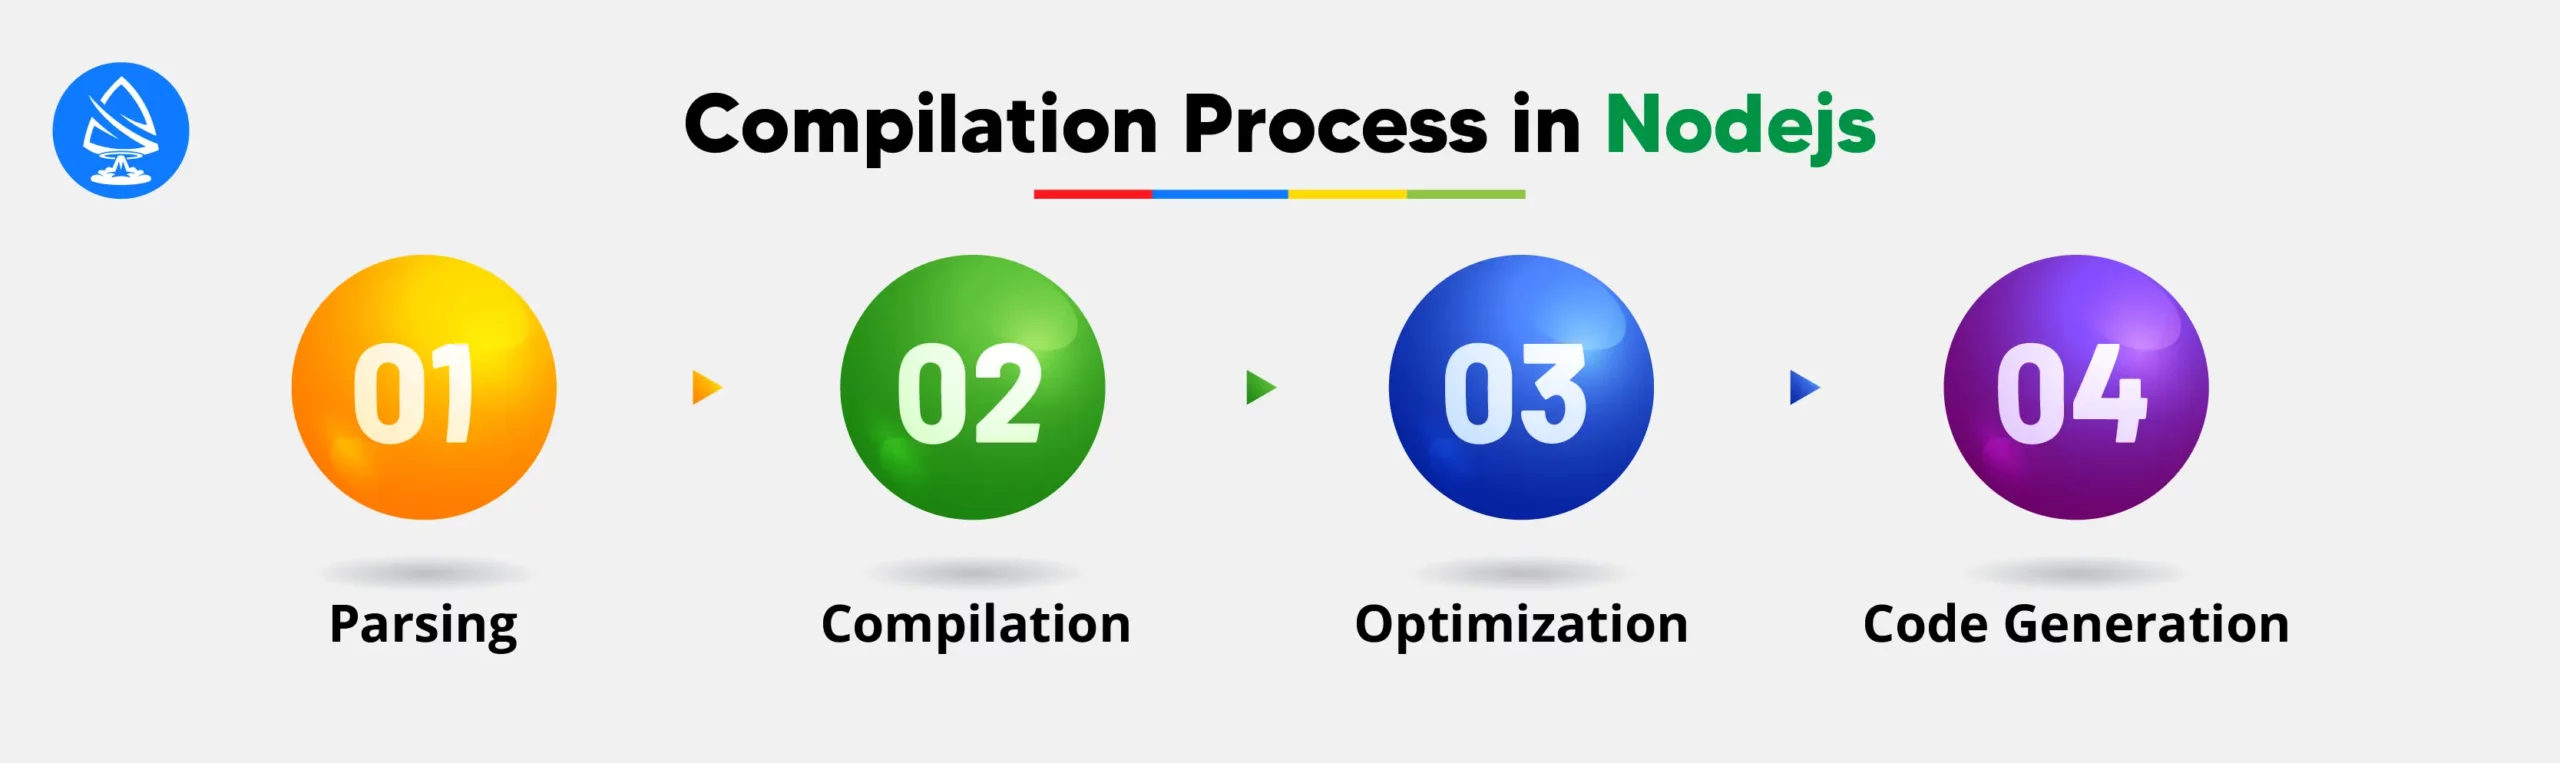 Compilation Process in Nodejs 